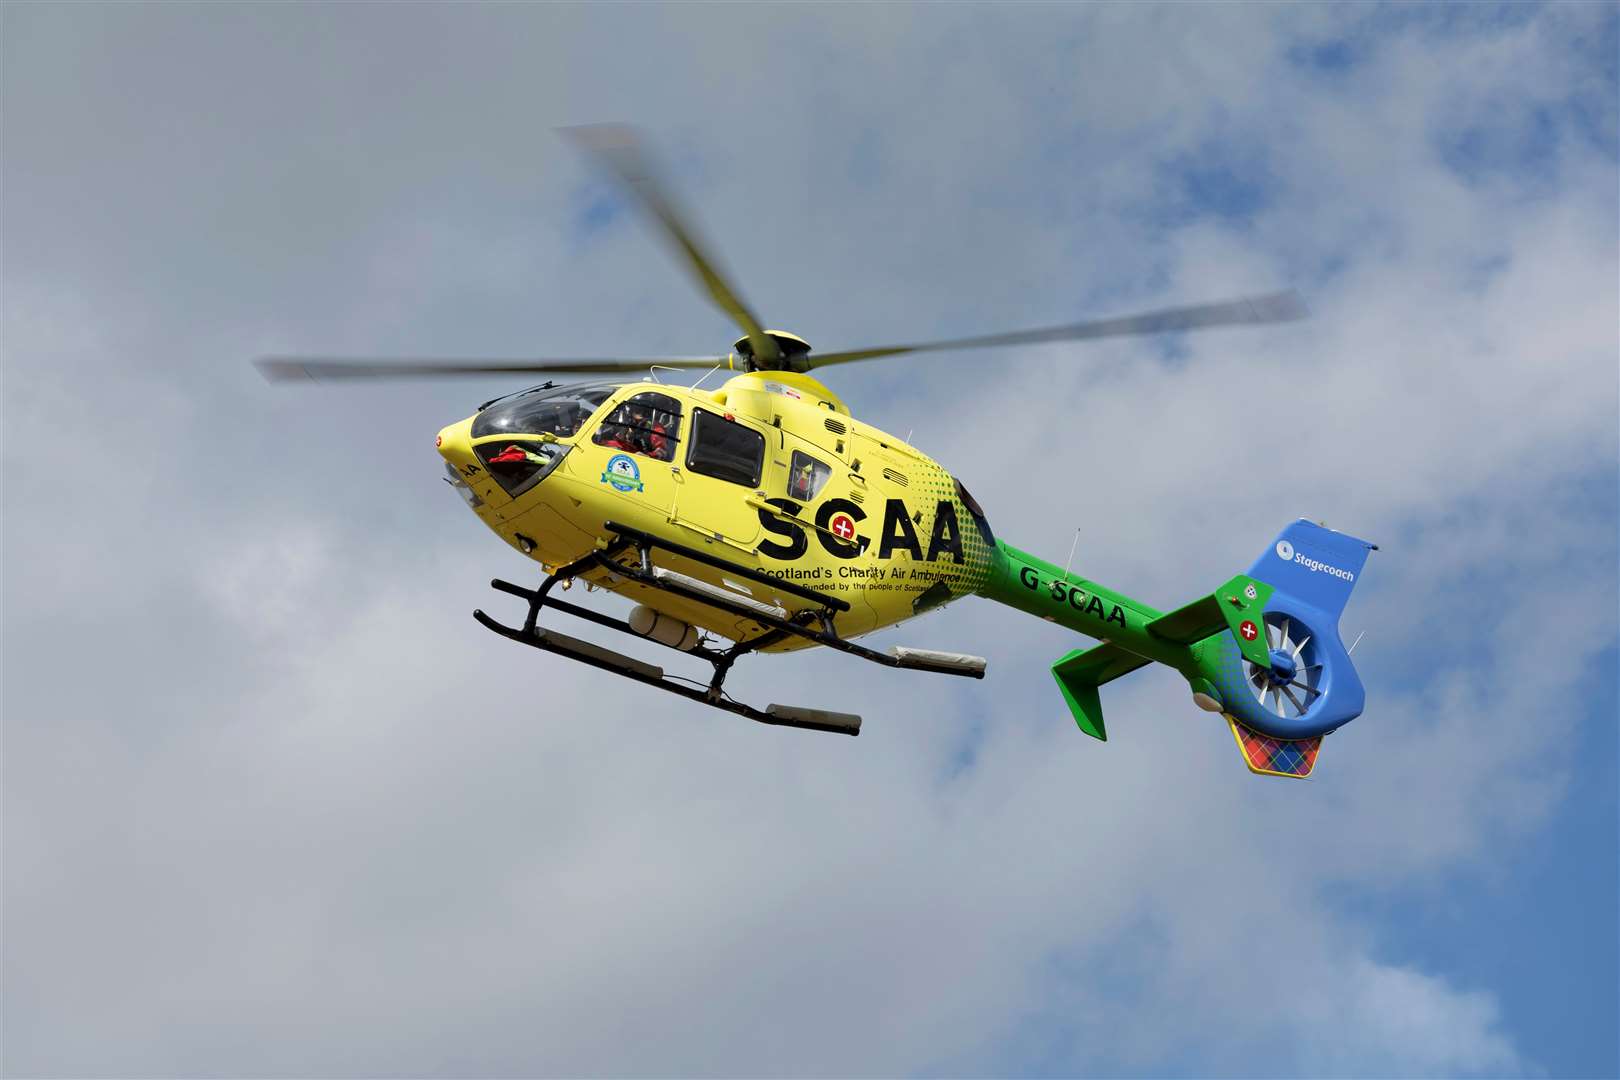 SCAA Scotland’s Charity Air Ambulance.